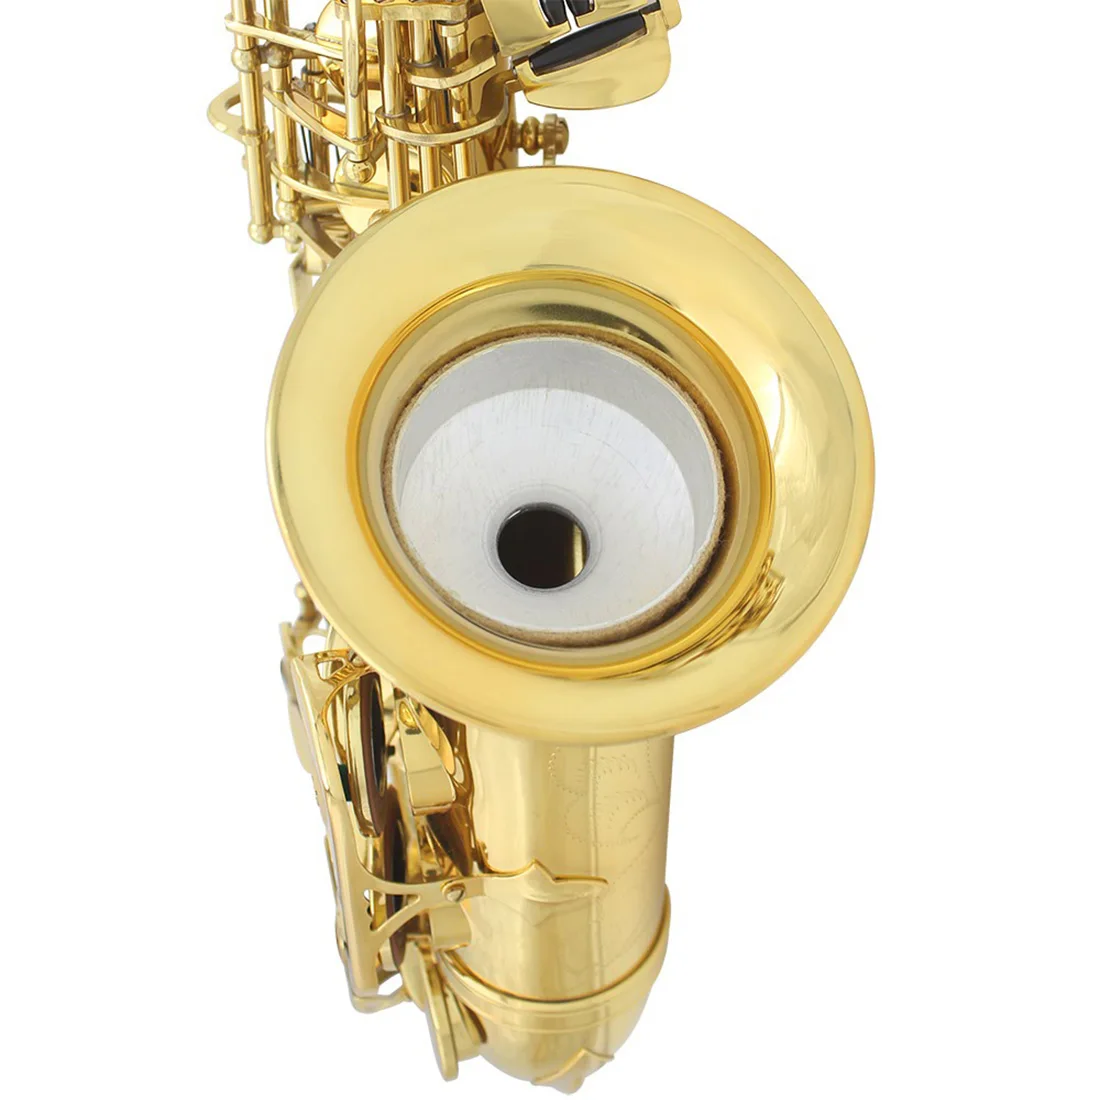 Aluminum Alloy Dampener for Soprano Sax Practice Noise Remove Music Instrument Part Vbest life Soprano Saxophone Mute Dampener 